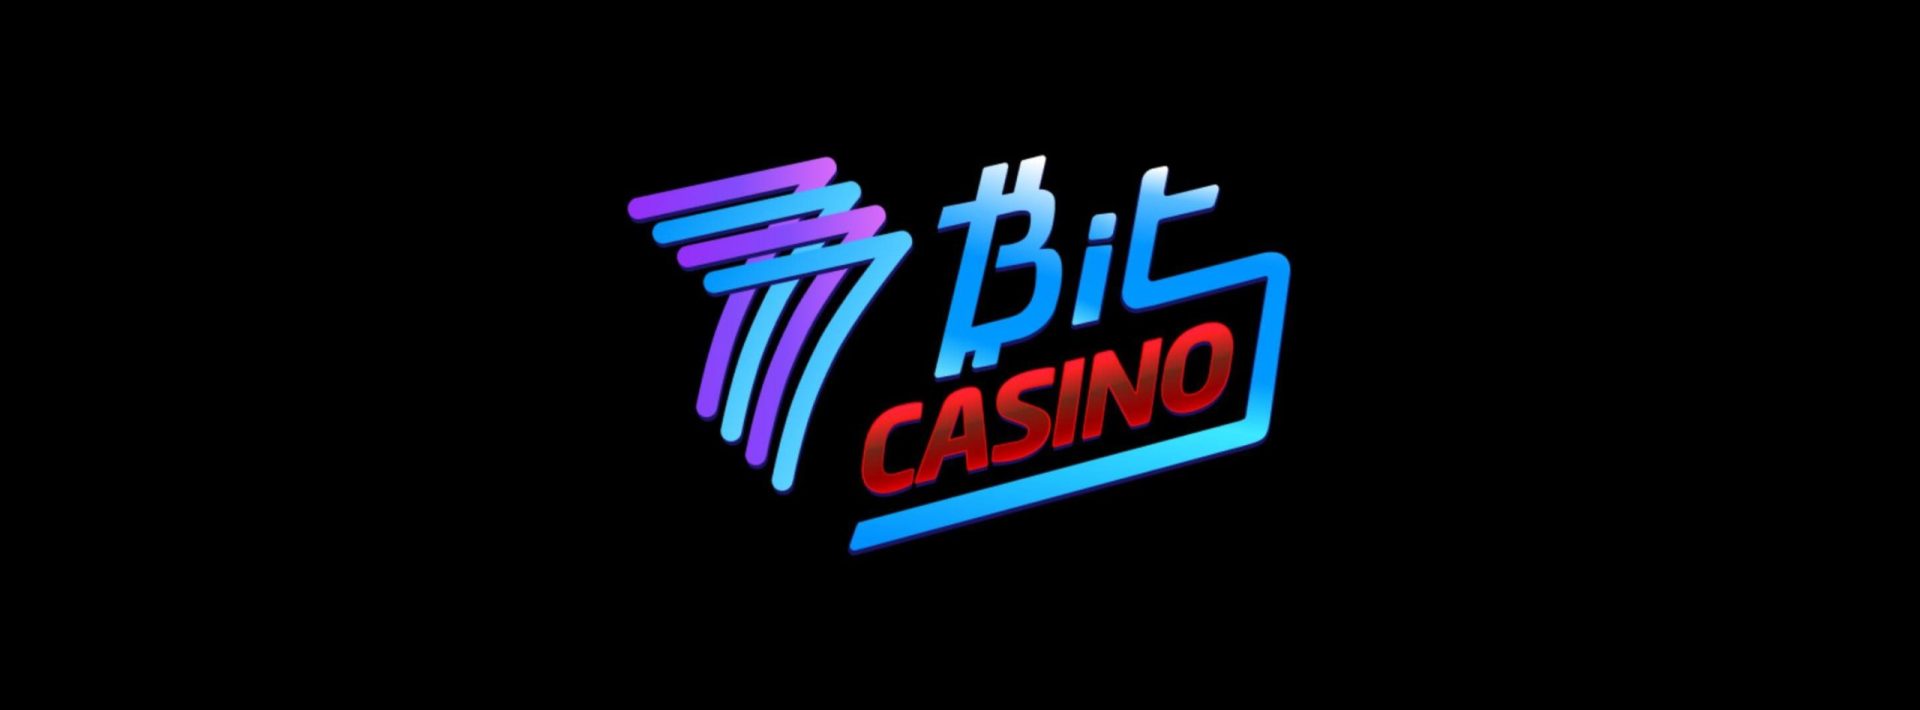 7Bit Casino Rennen